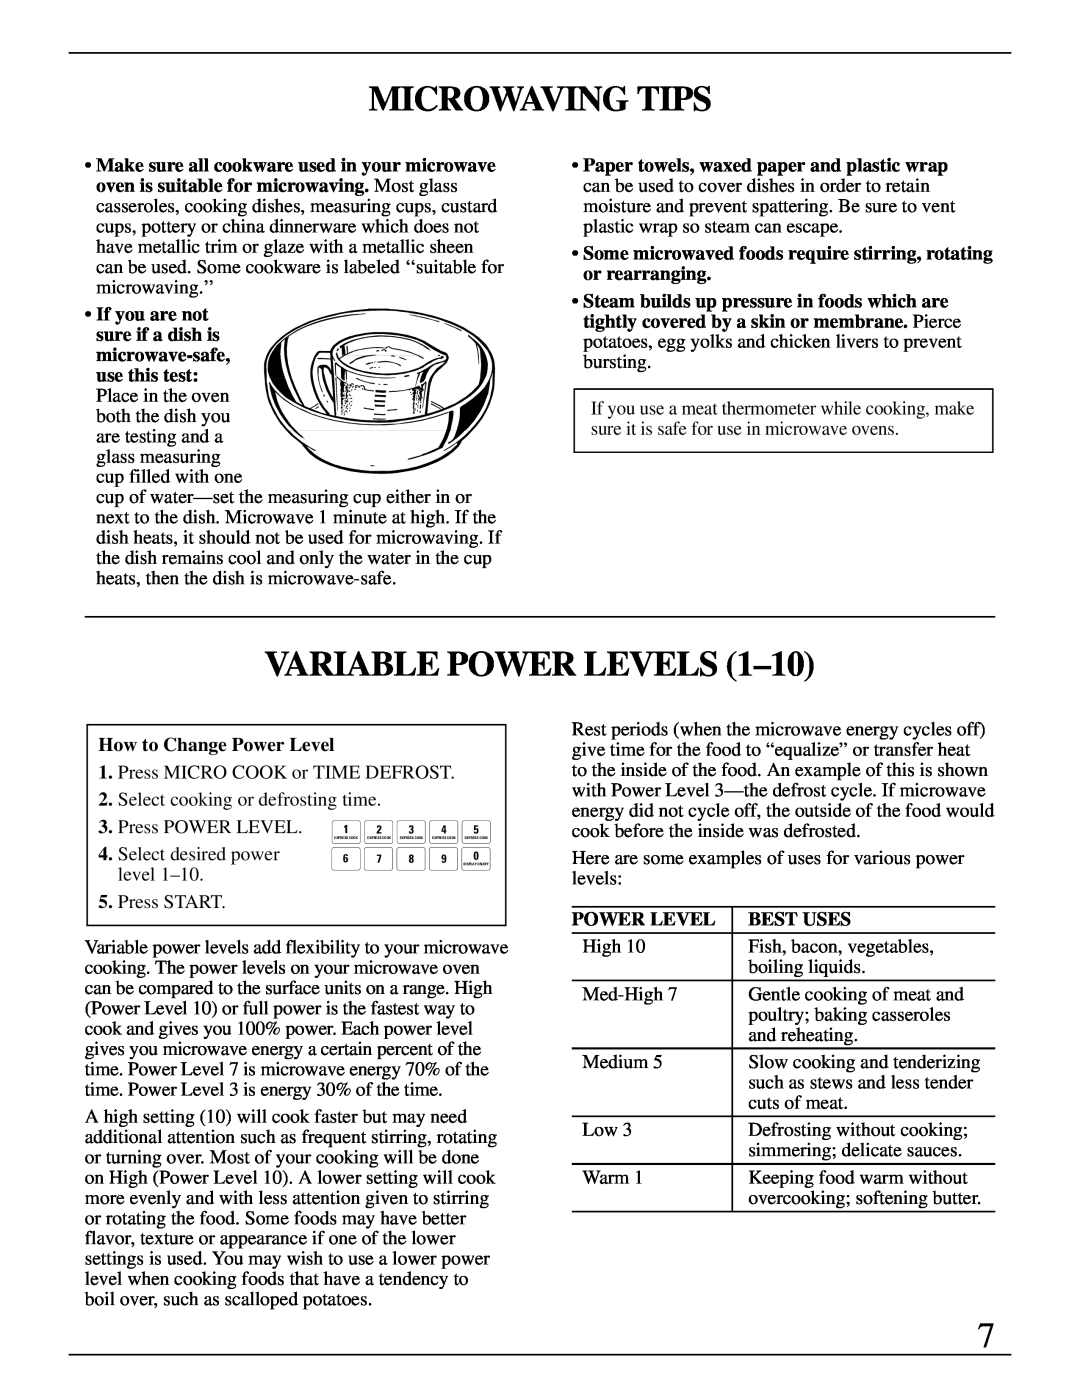 GE Monogram ZMC1090 Series manual Microwaving Tips, Variable Power Levels 